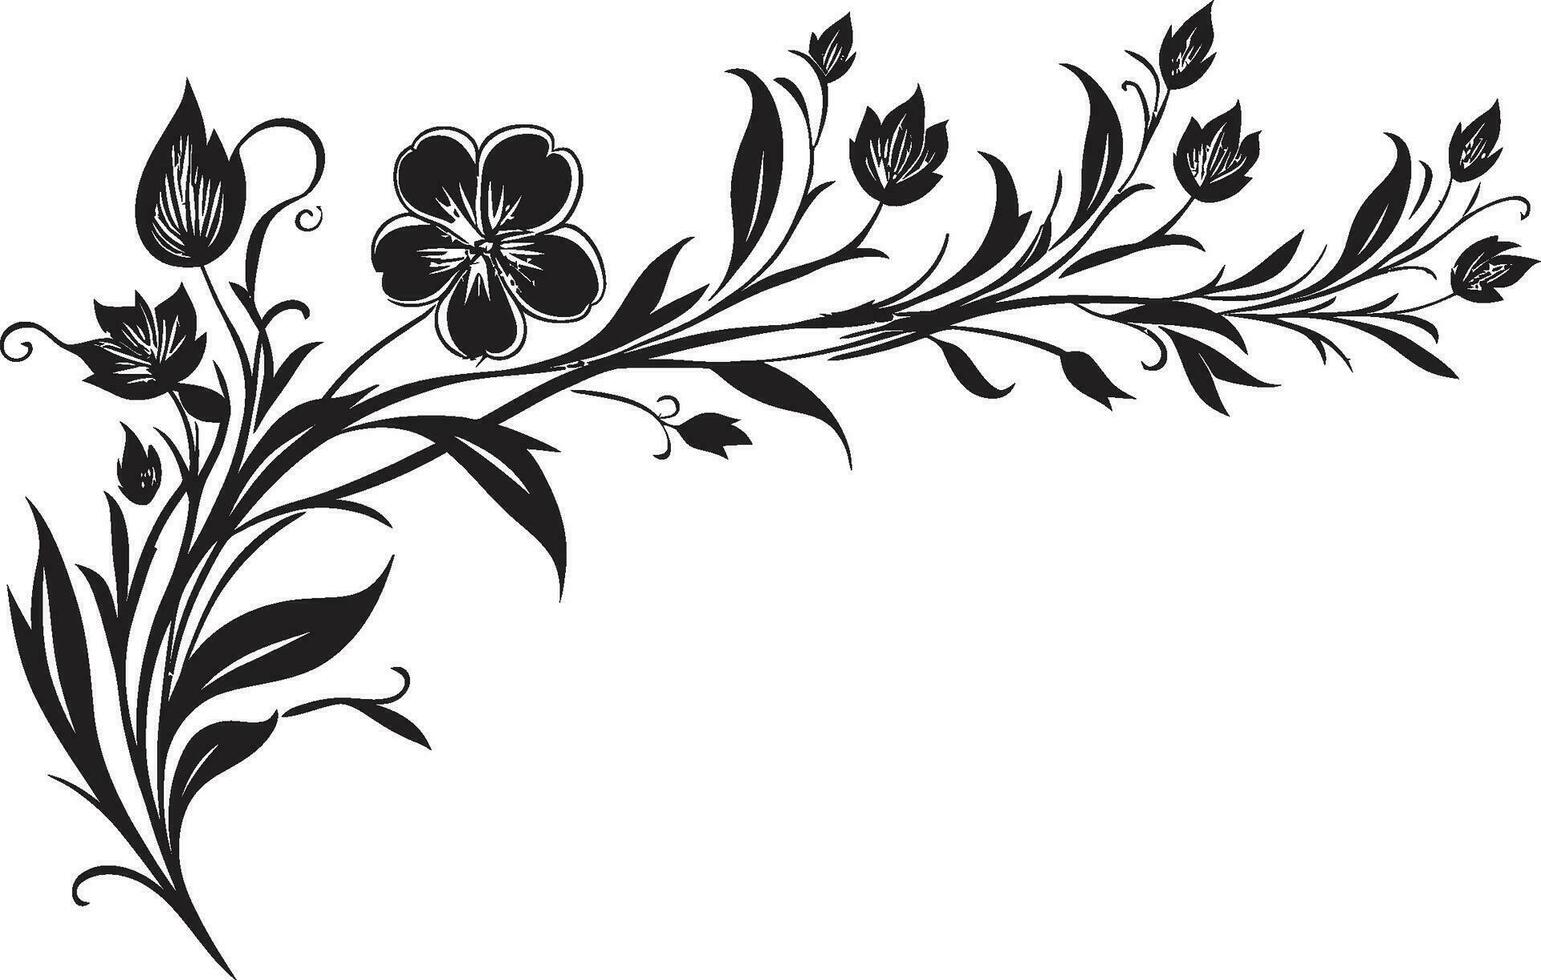 Artistic Flora Hand Drawn Black Vector Icon Organic Elegance Floral Design Element in Black